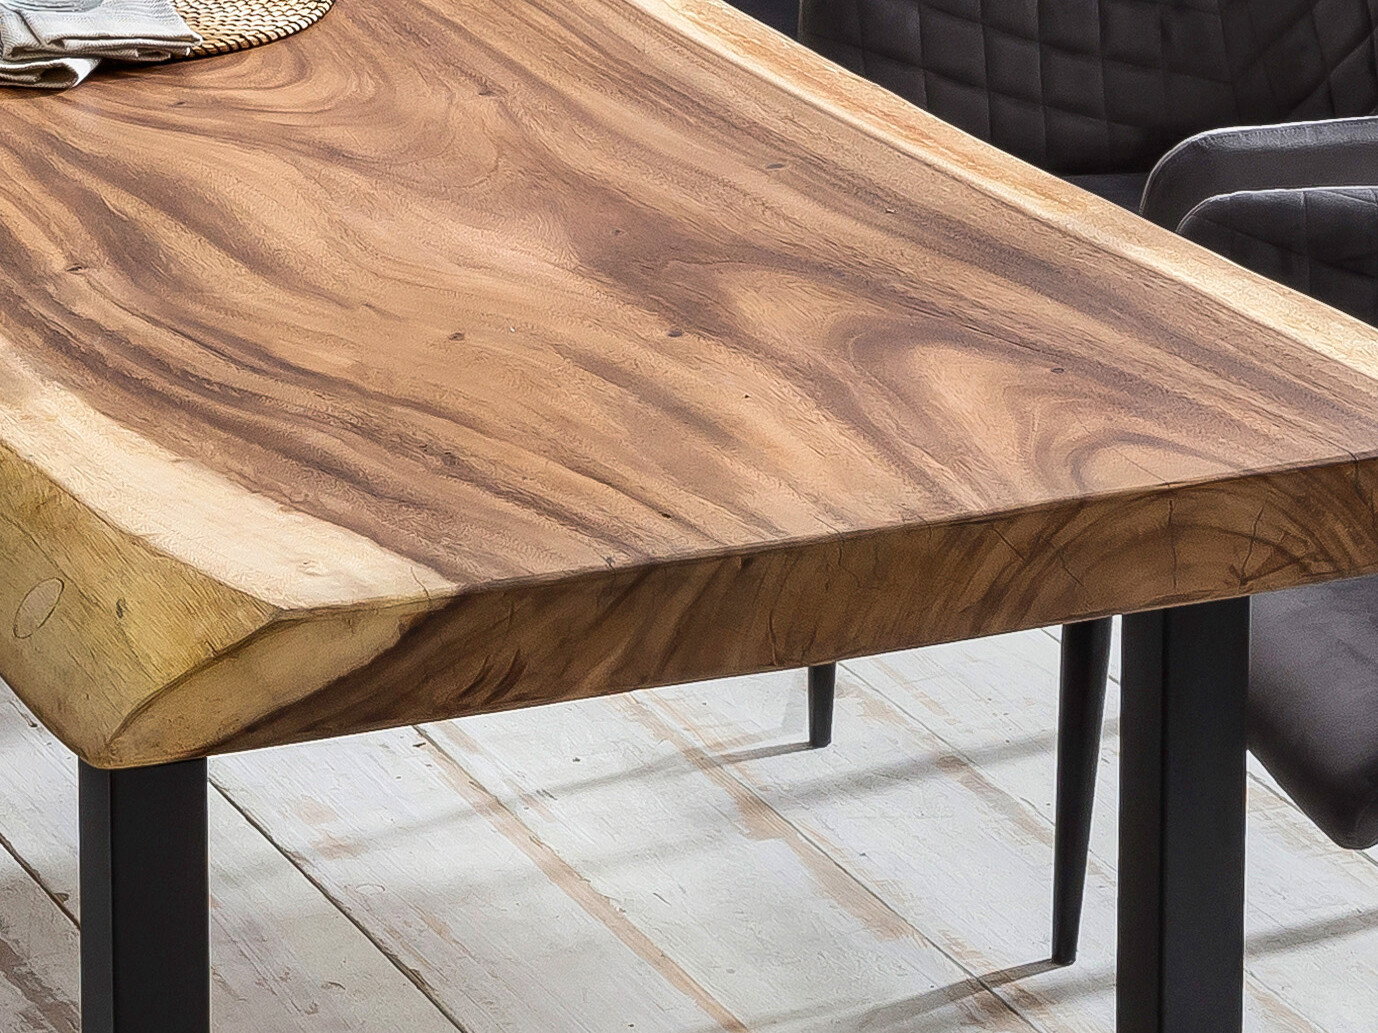 Baumkante-Esstisch TABLES & CO 220 x 90 cm Suarholz natur